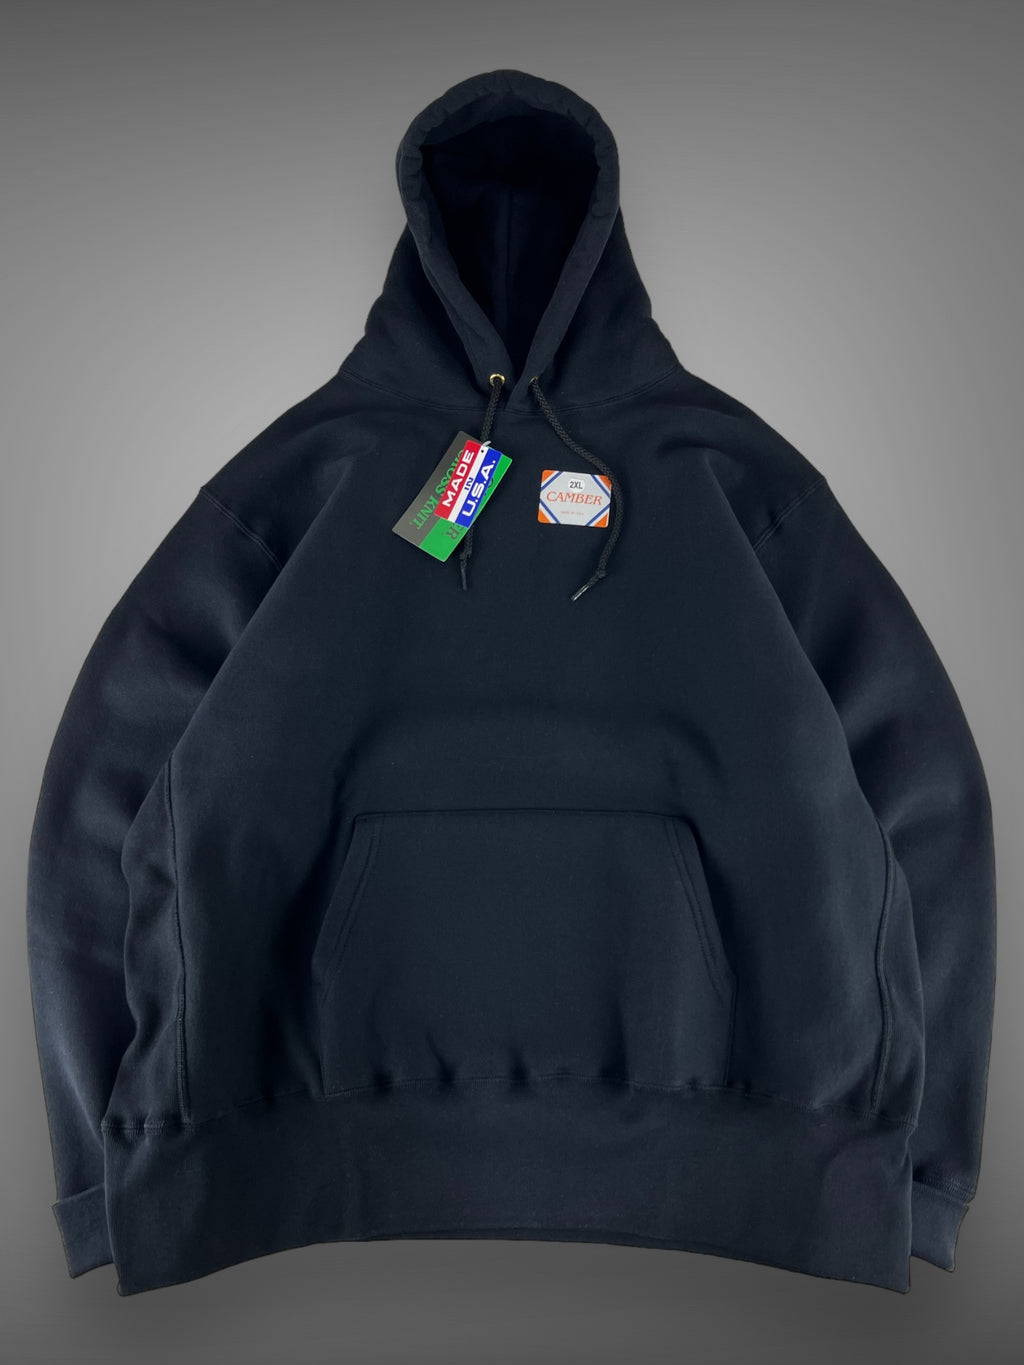 Deadstock Camber black hooded sweatshirt XXL